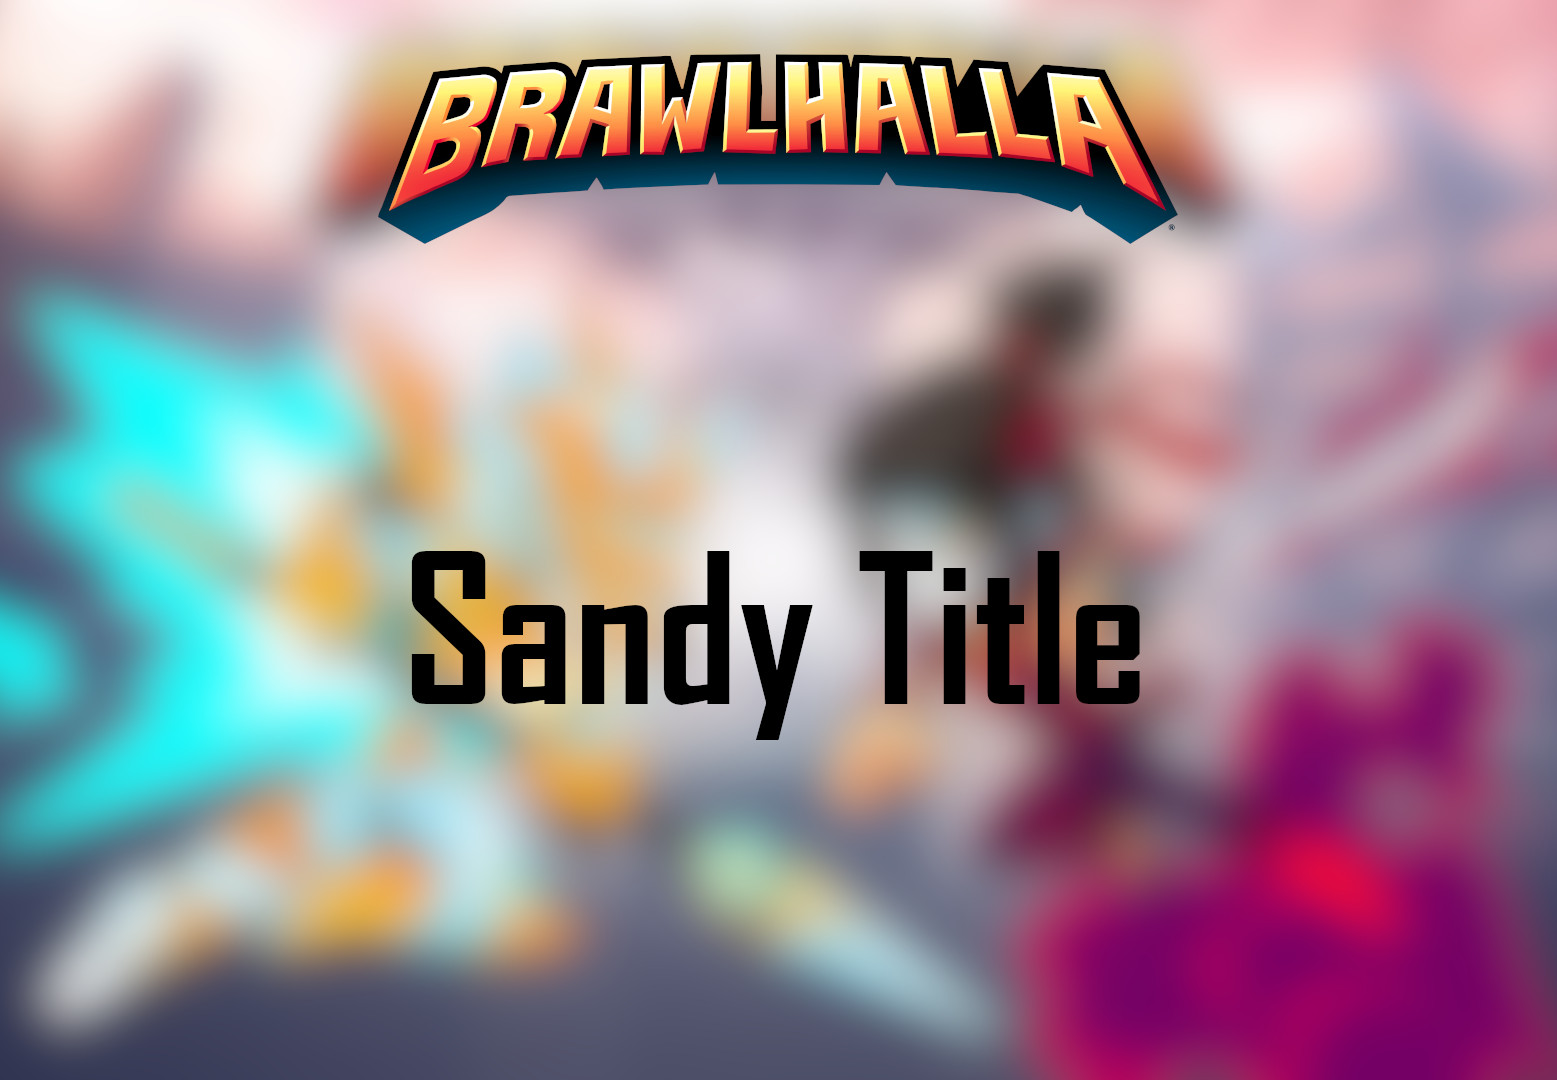 [$ 0.33] Brawlhalla - Sandy Title DLC CD Key